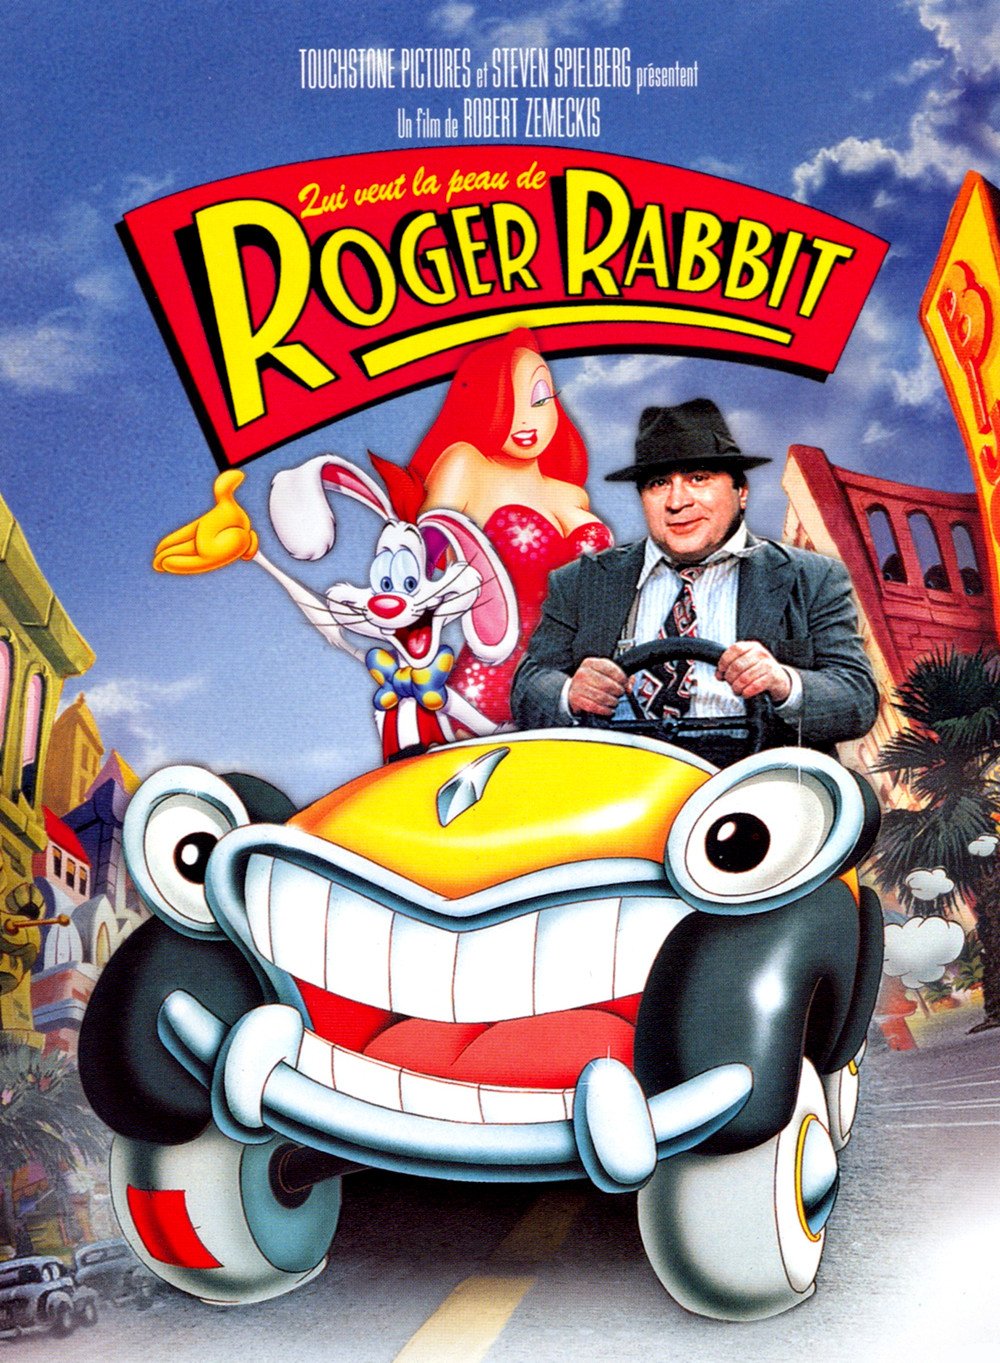 Qui veut la peau de Roger Rabbit ? streaming